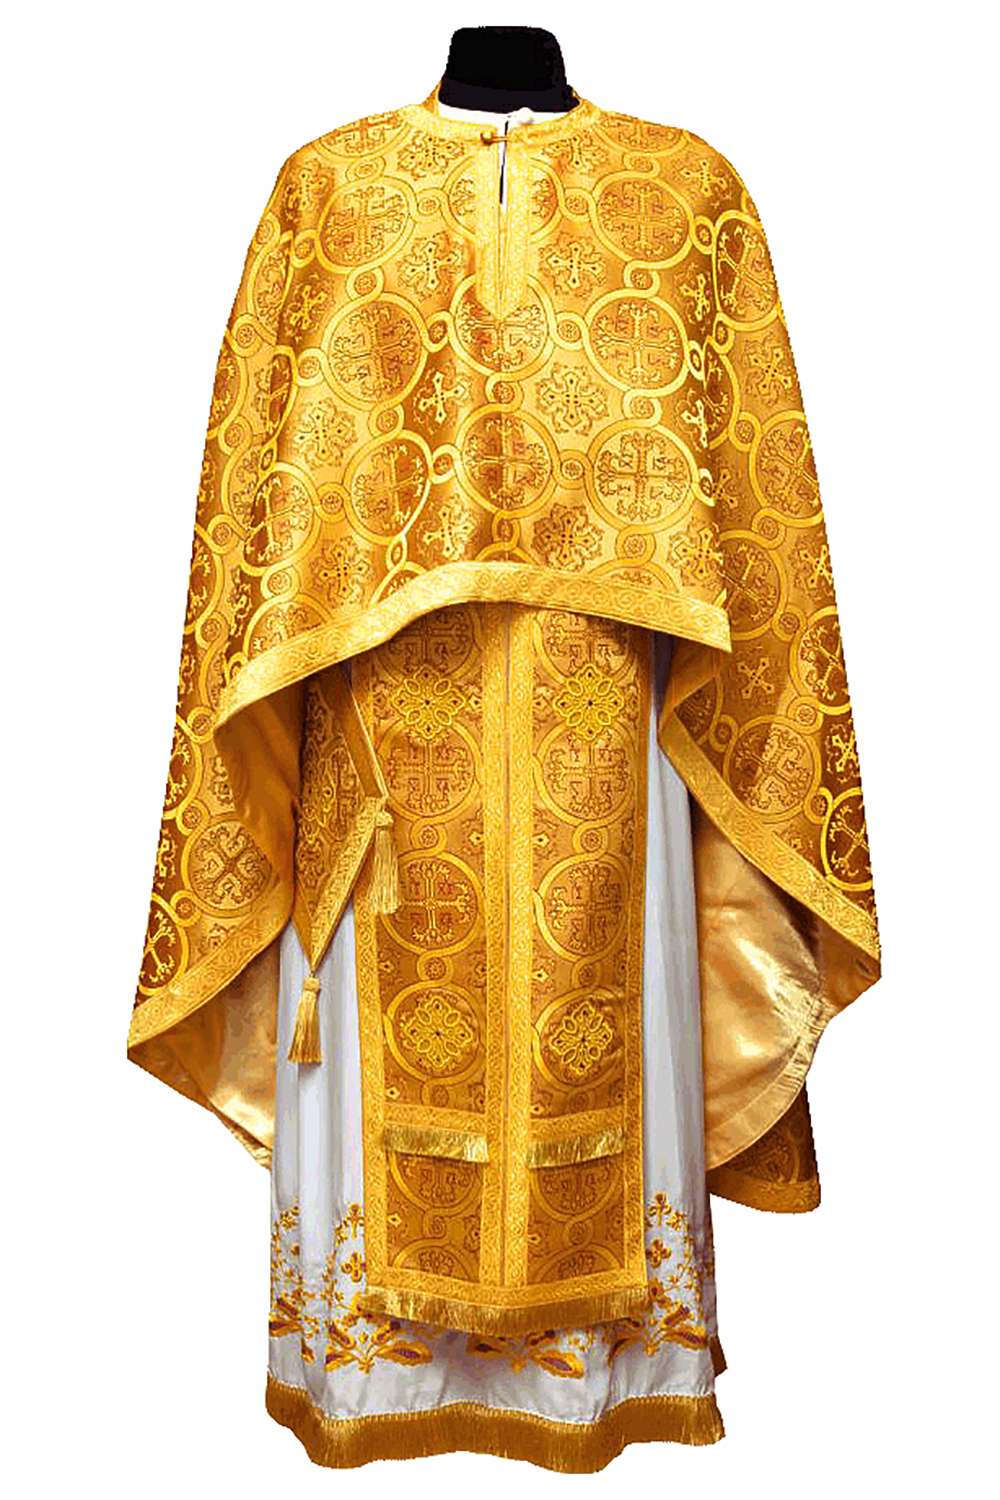 Priest Vestment yellow (Greek Style)